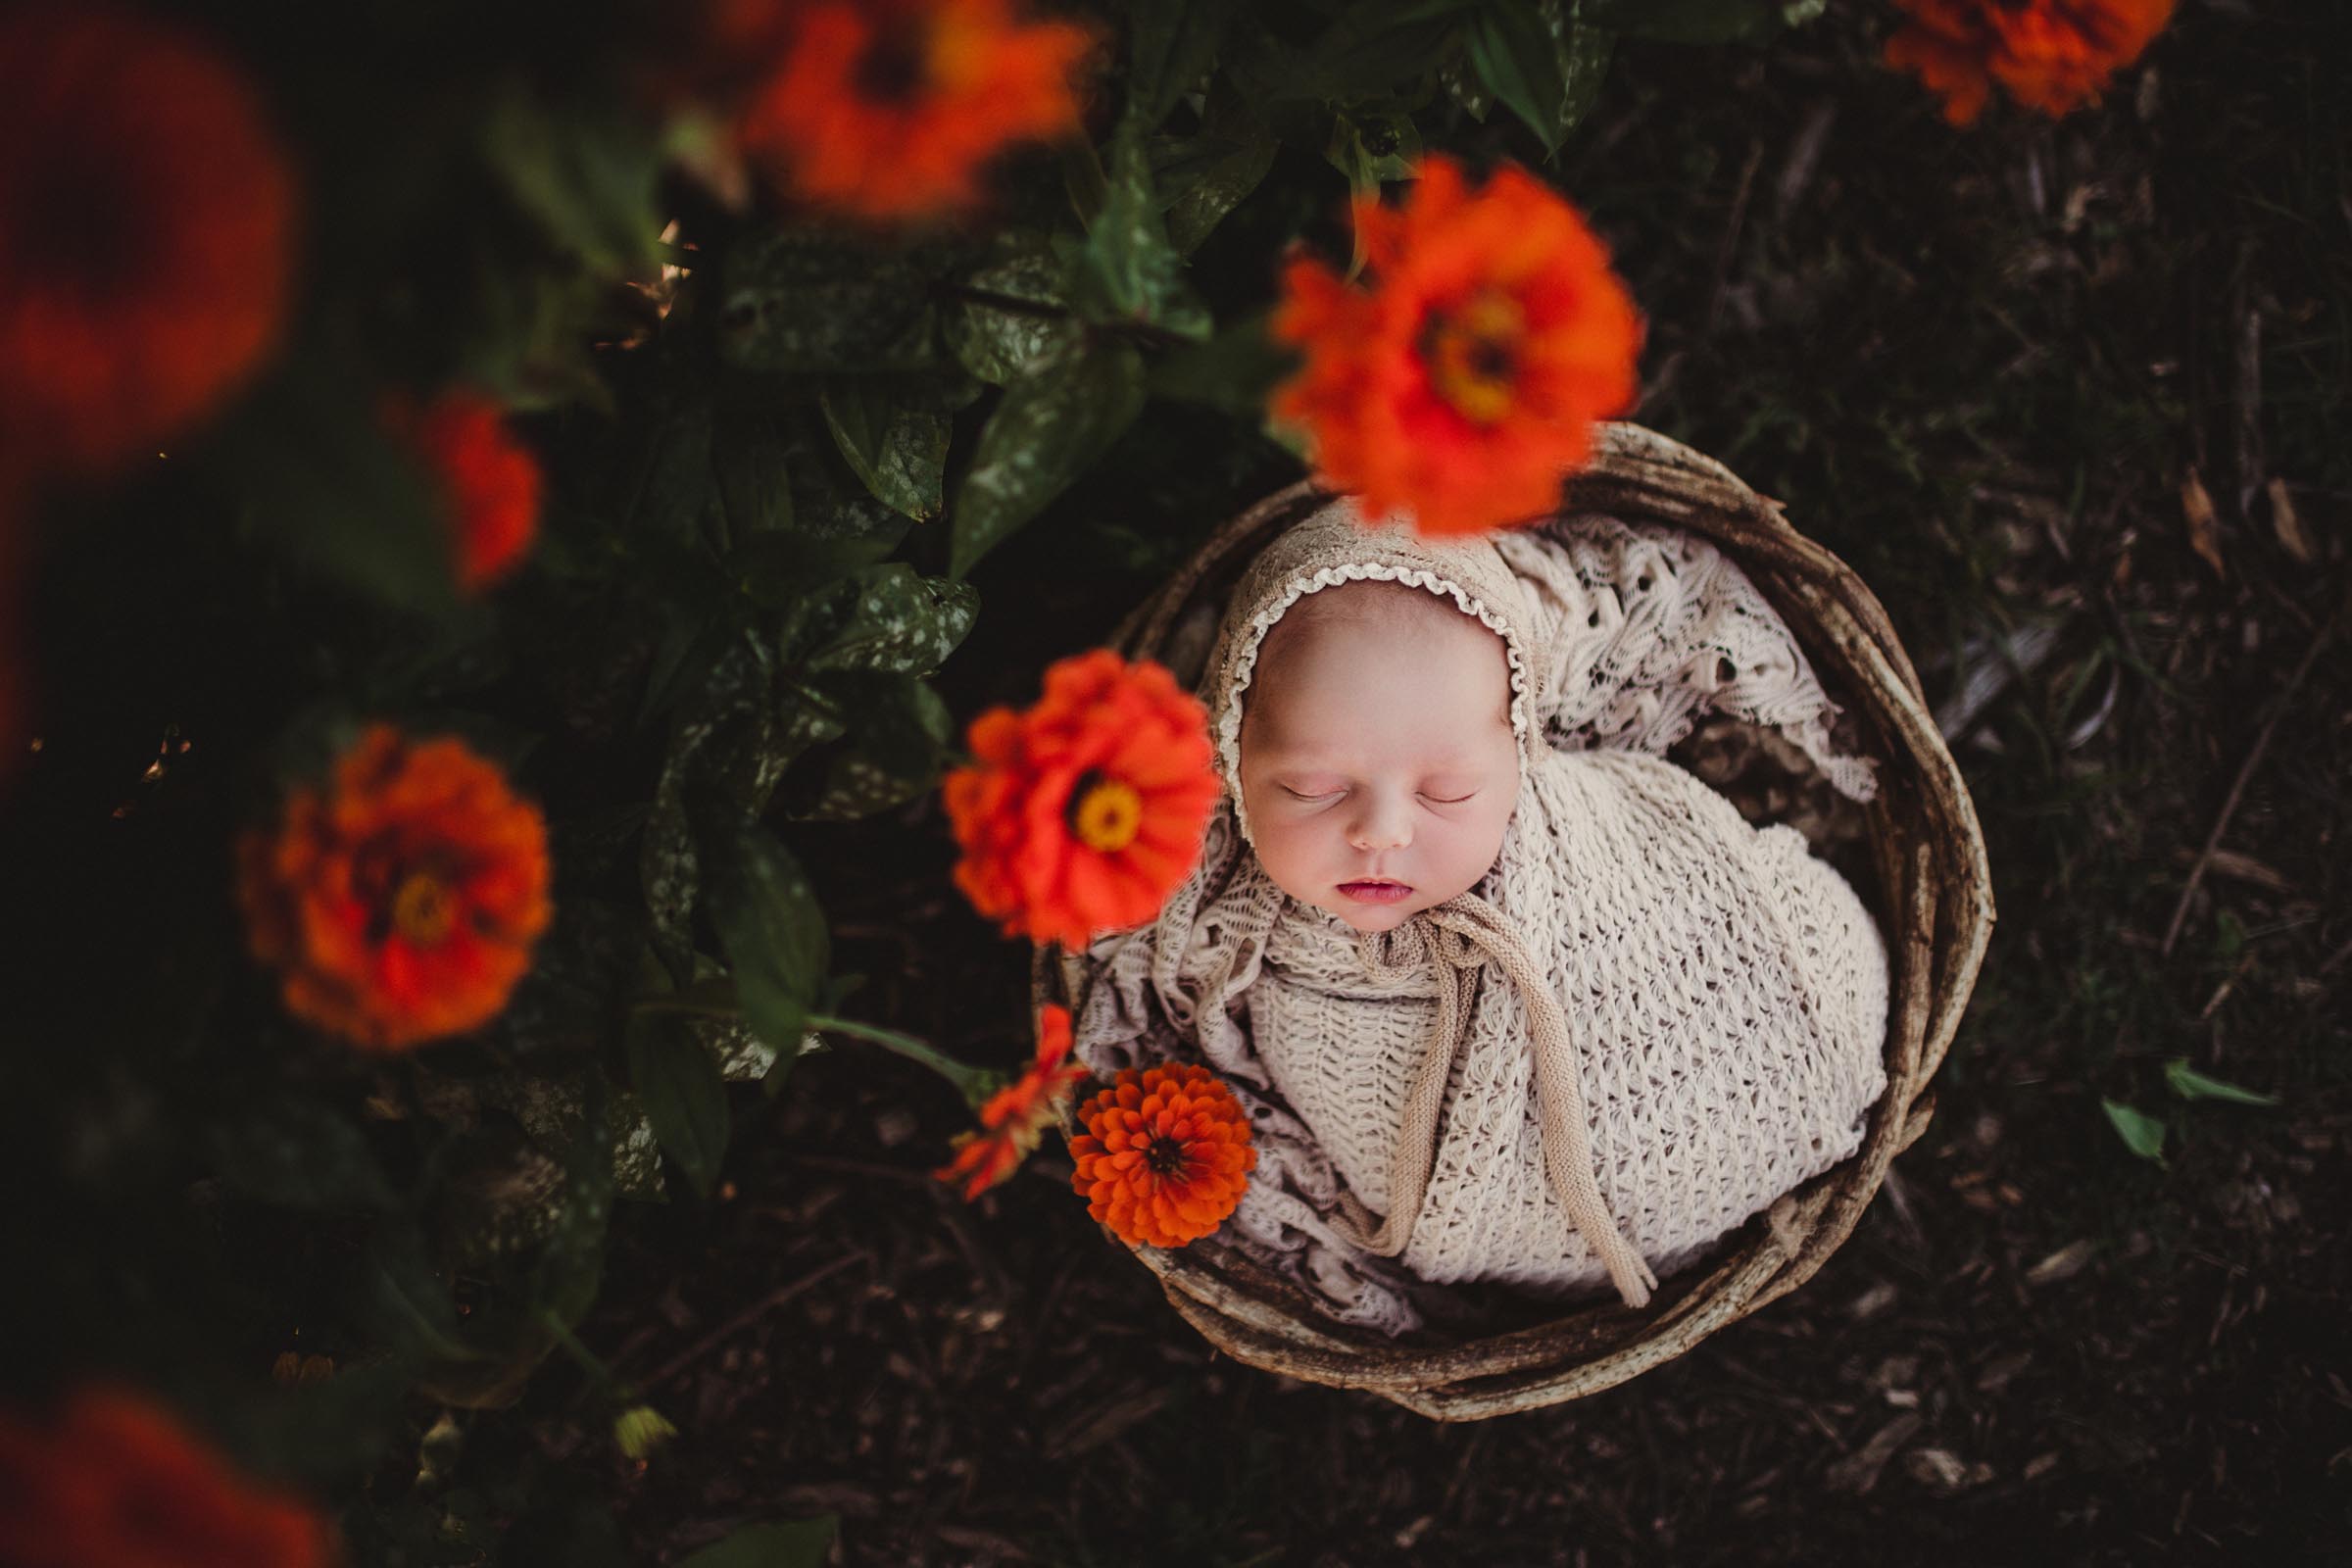 newborn wrapped in a bucket outdoors by poppy flowers